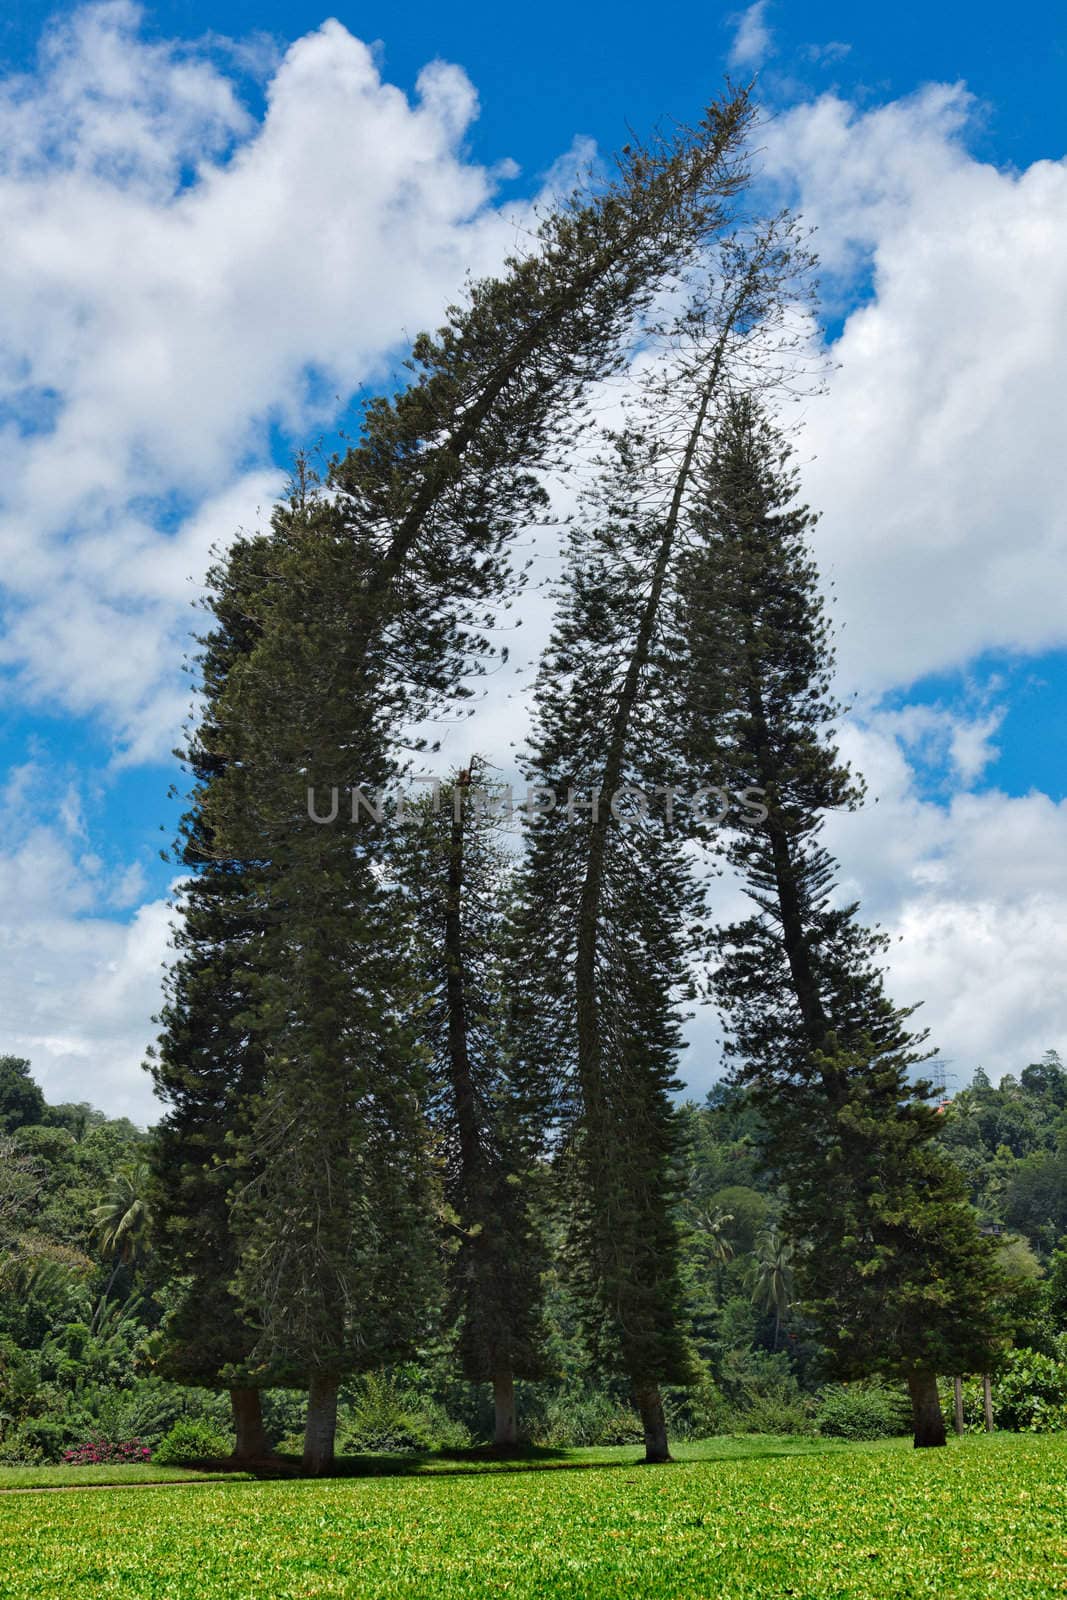 Crooked Cook Pines (Araucaria columnaris) by dimol